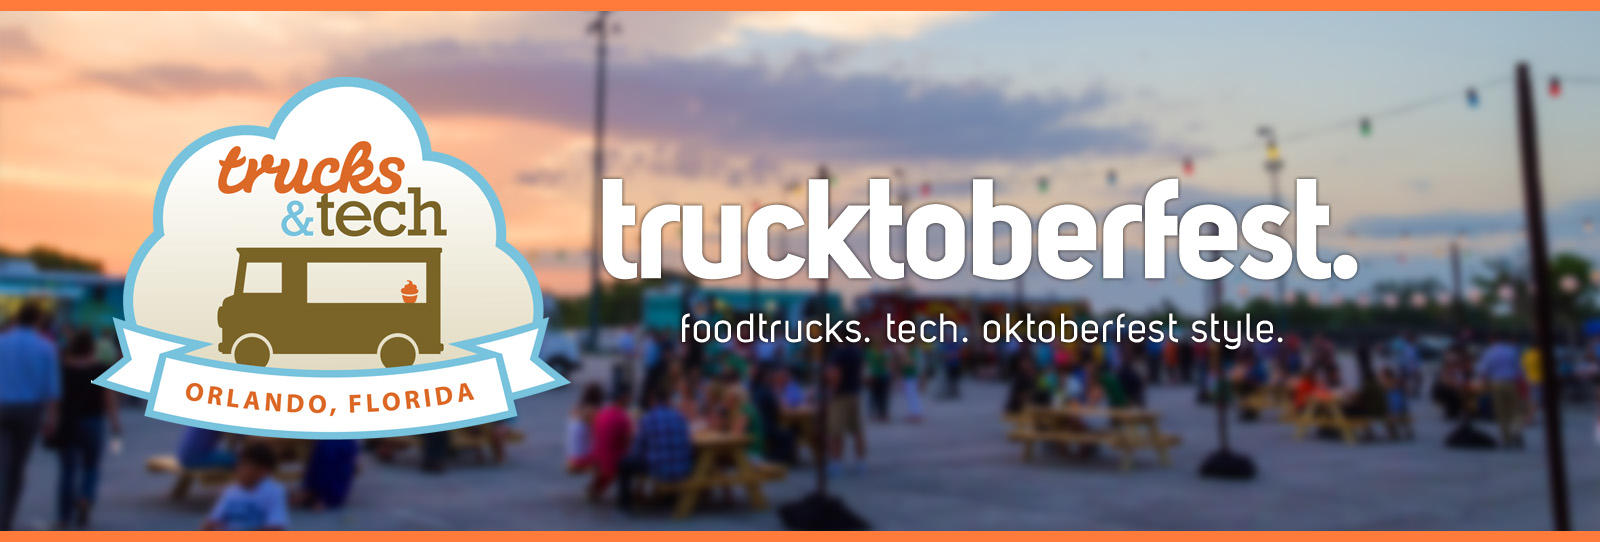 Trucks & Tech II Trucktoberfest:  October 17